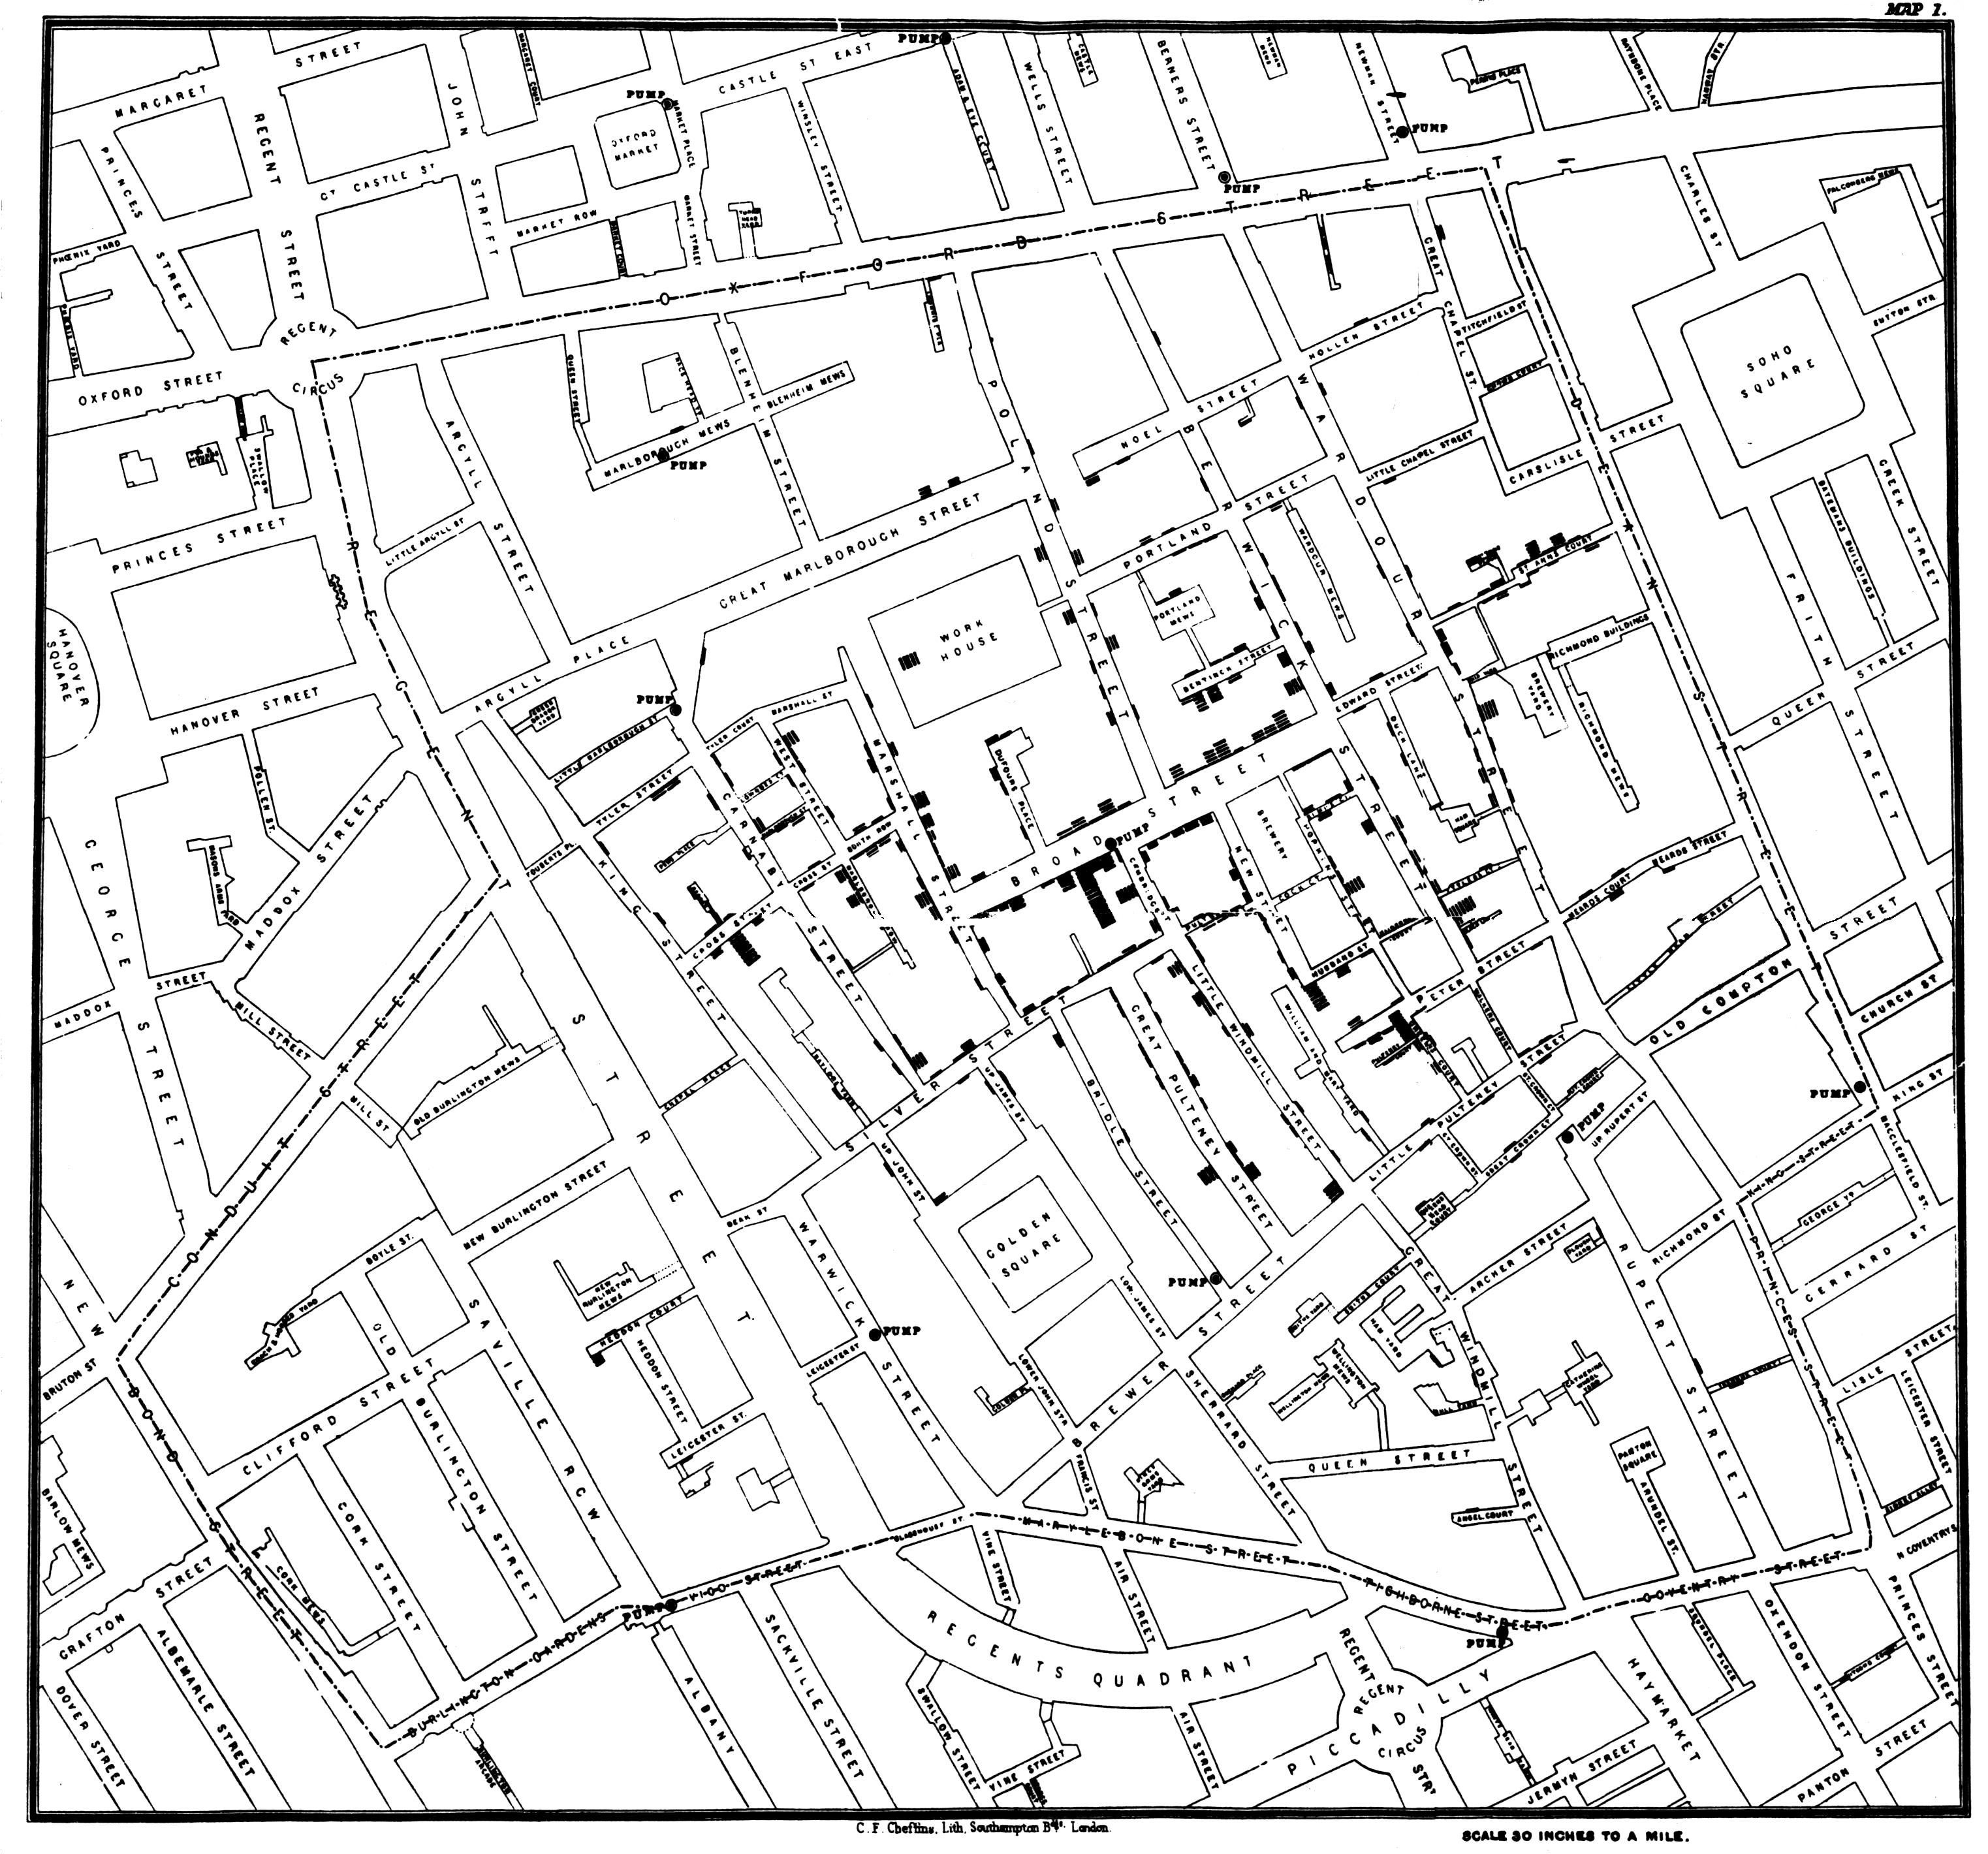 one of the original Broad
        Street cholera maps by John Snow